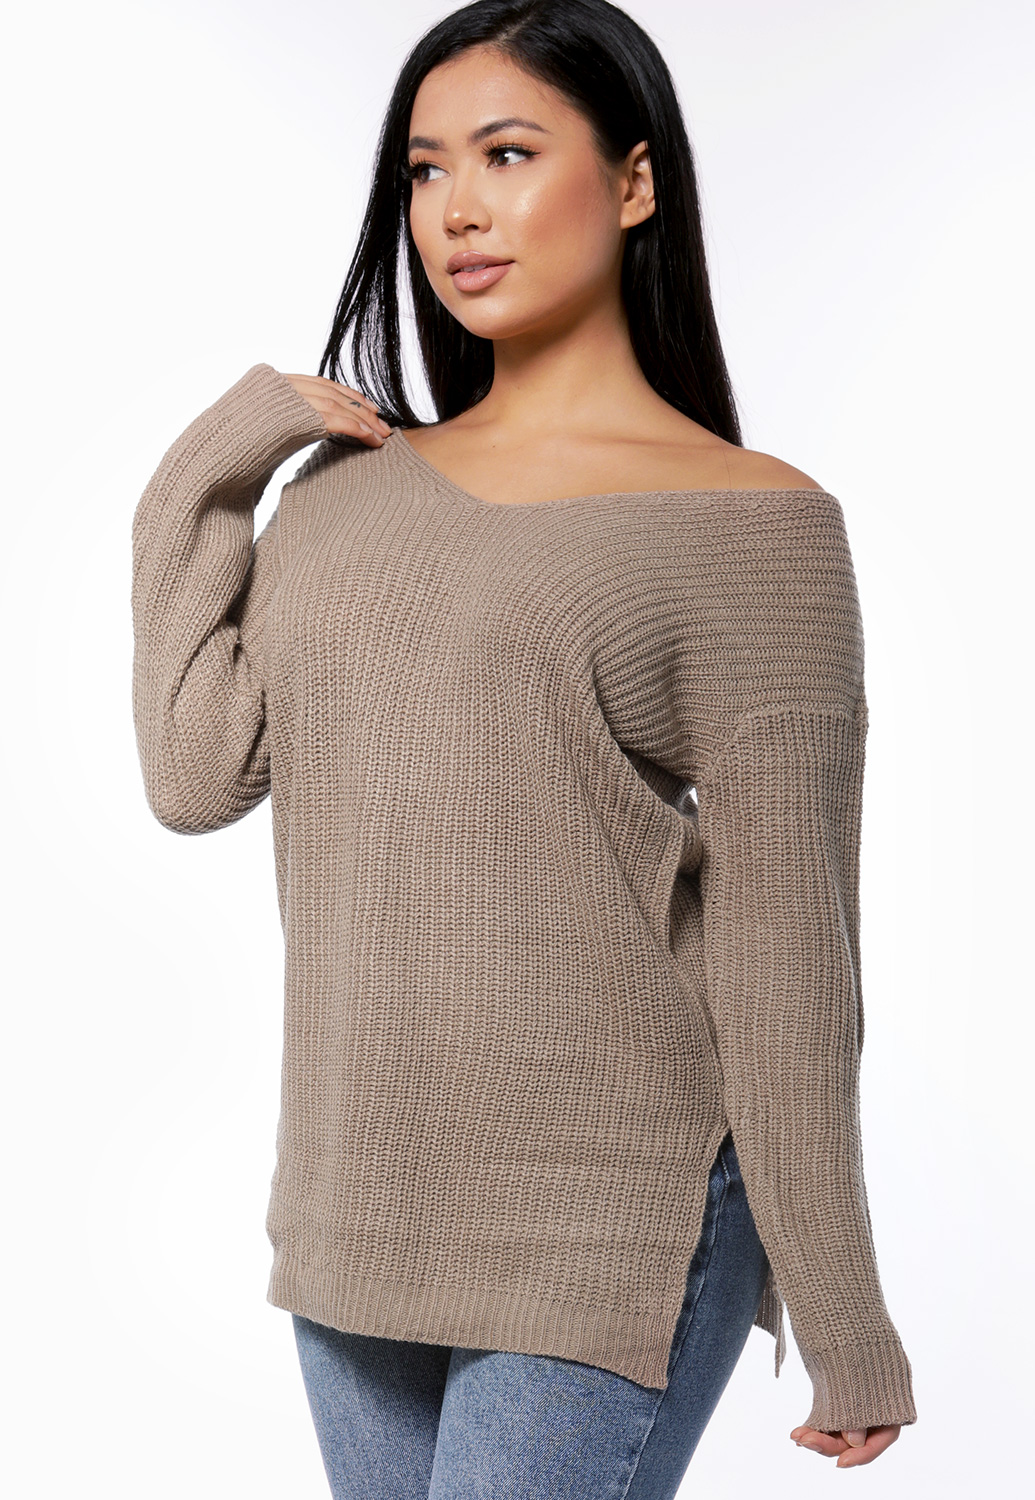 Lace-Up Back Knit Sweater